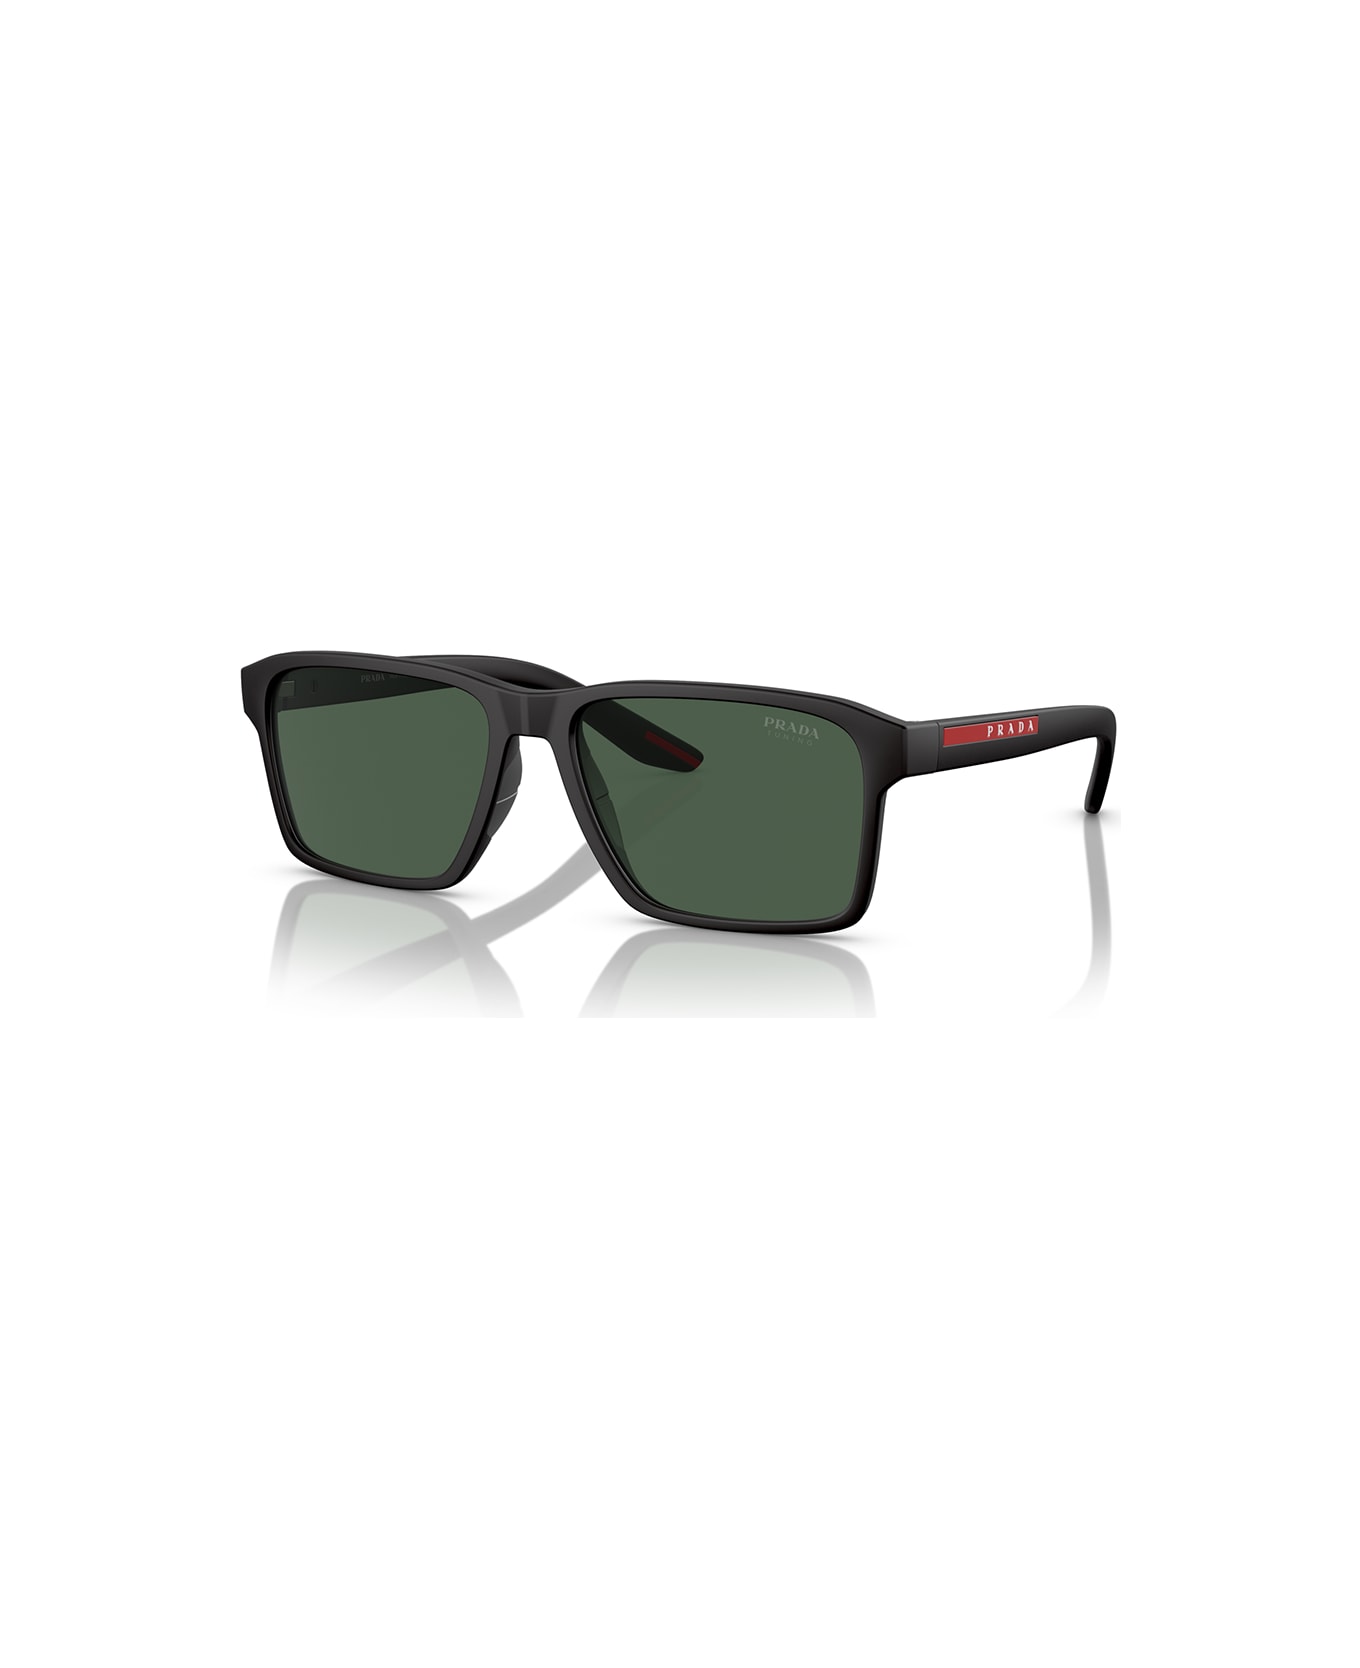 Prada Linea Rossa Sunglasses - Nero/Verde